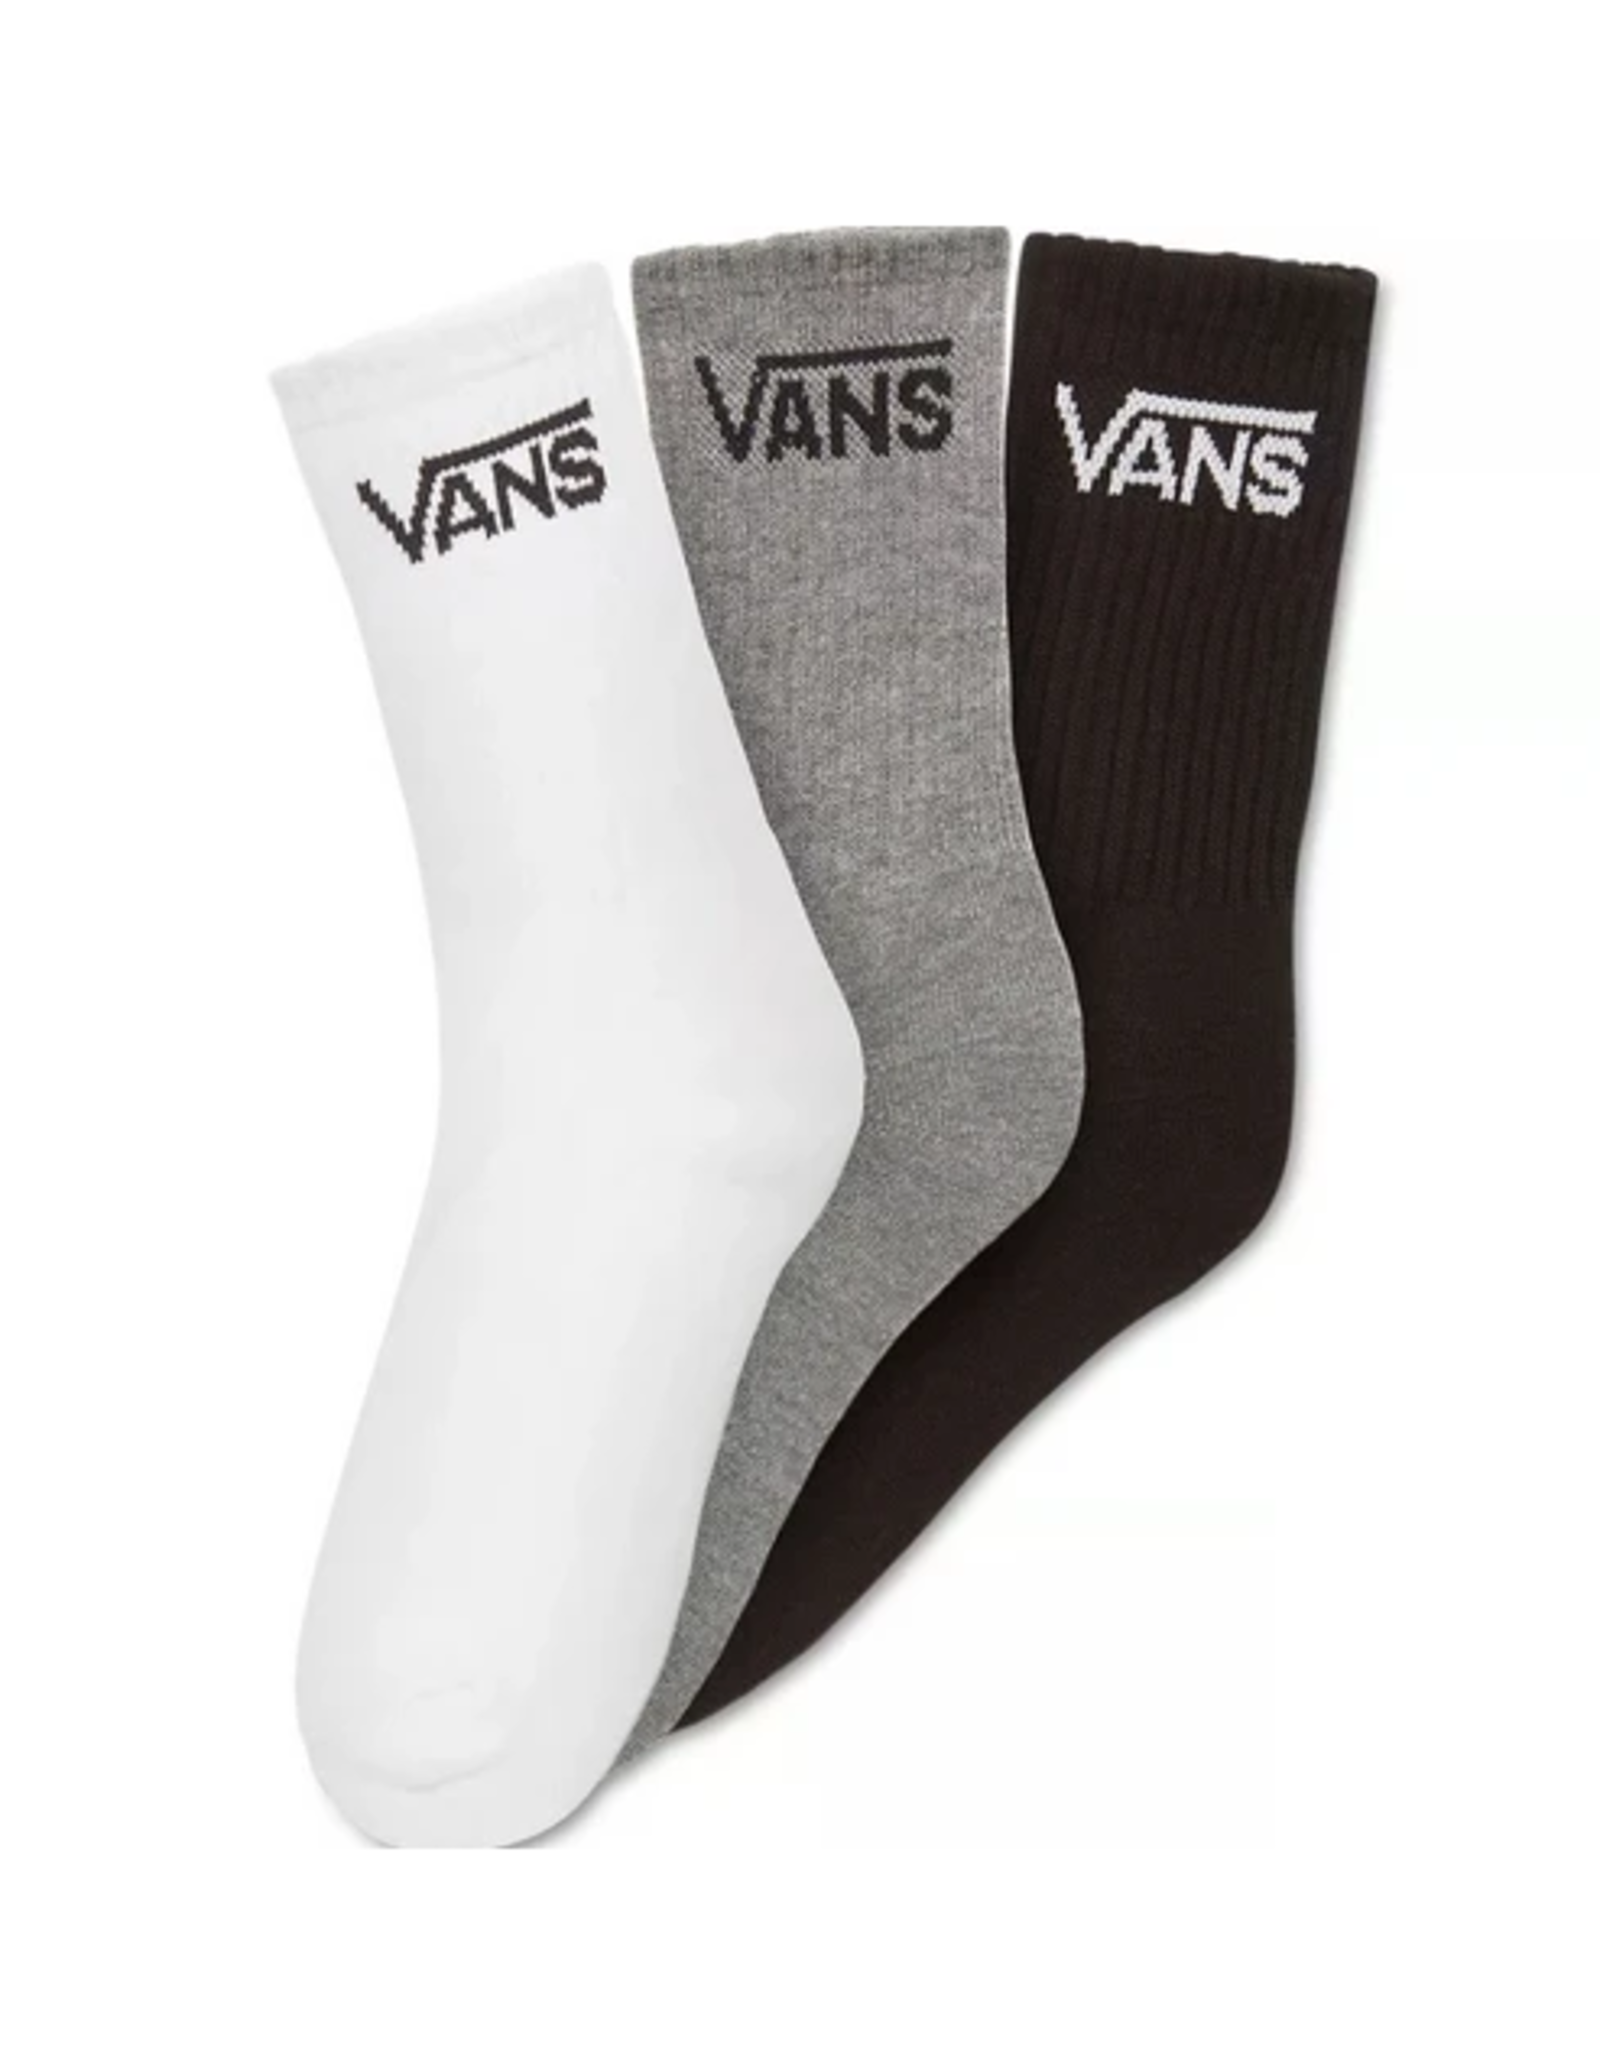 black vans socks